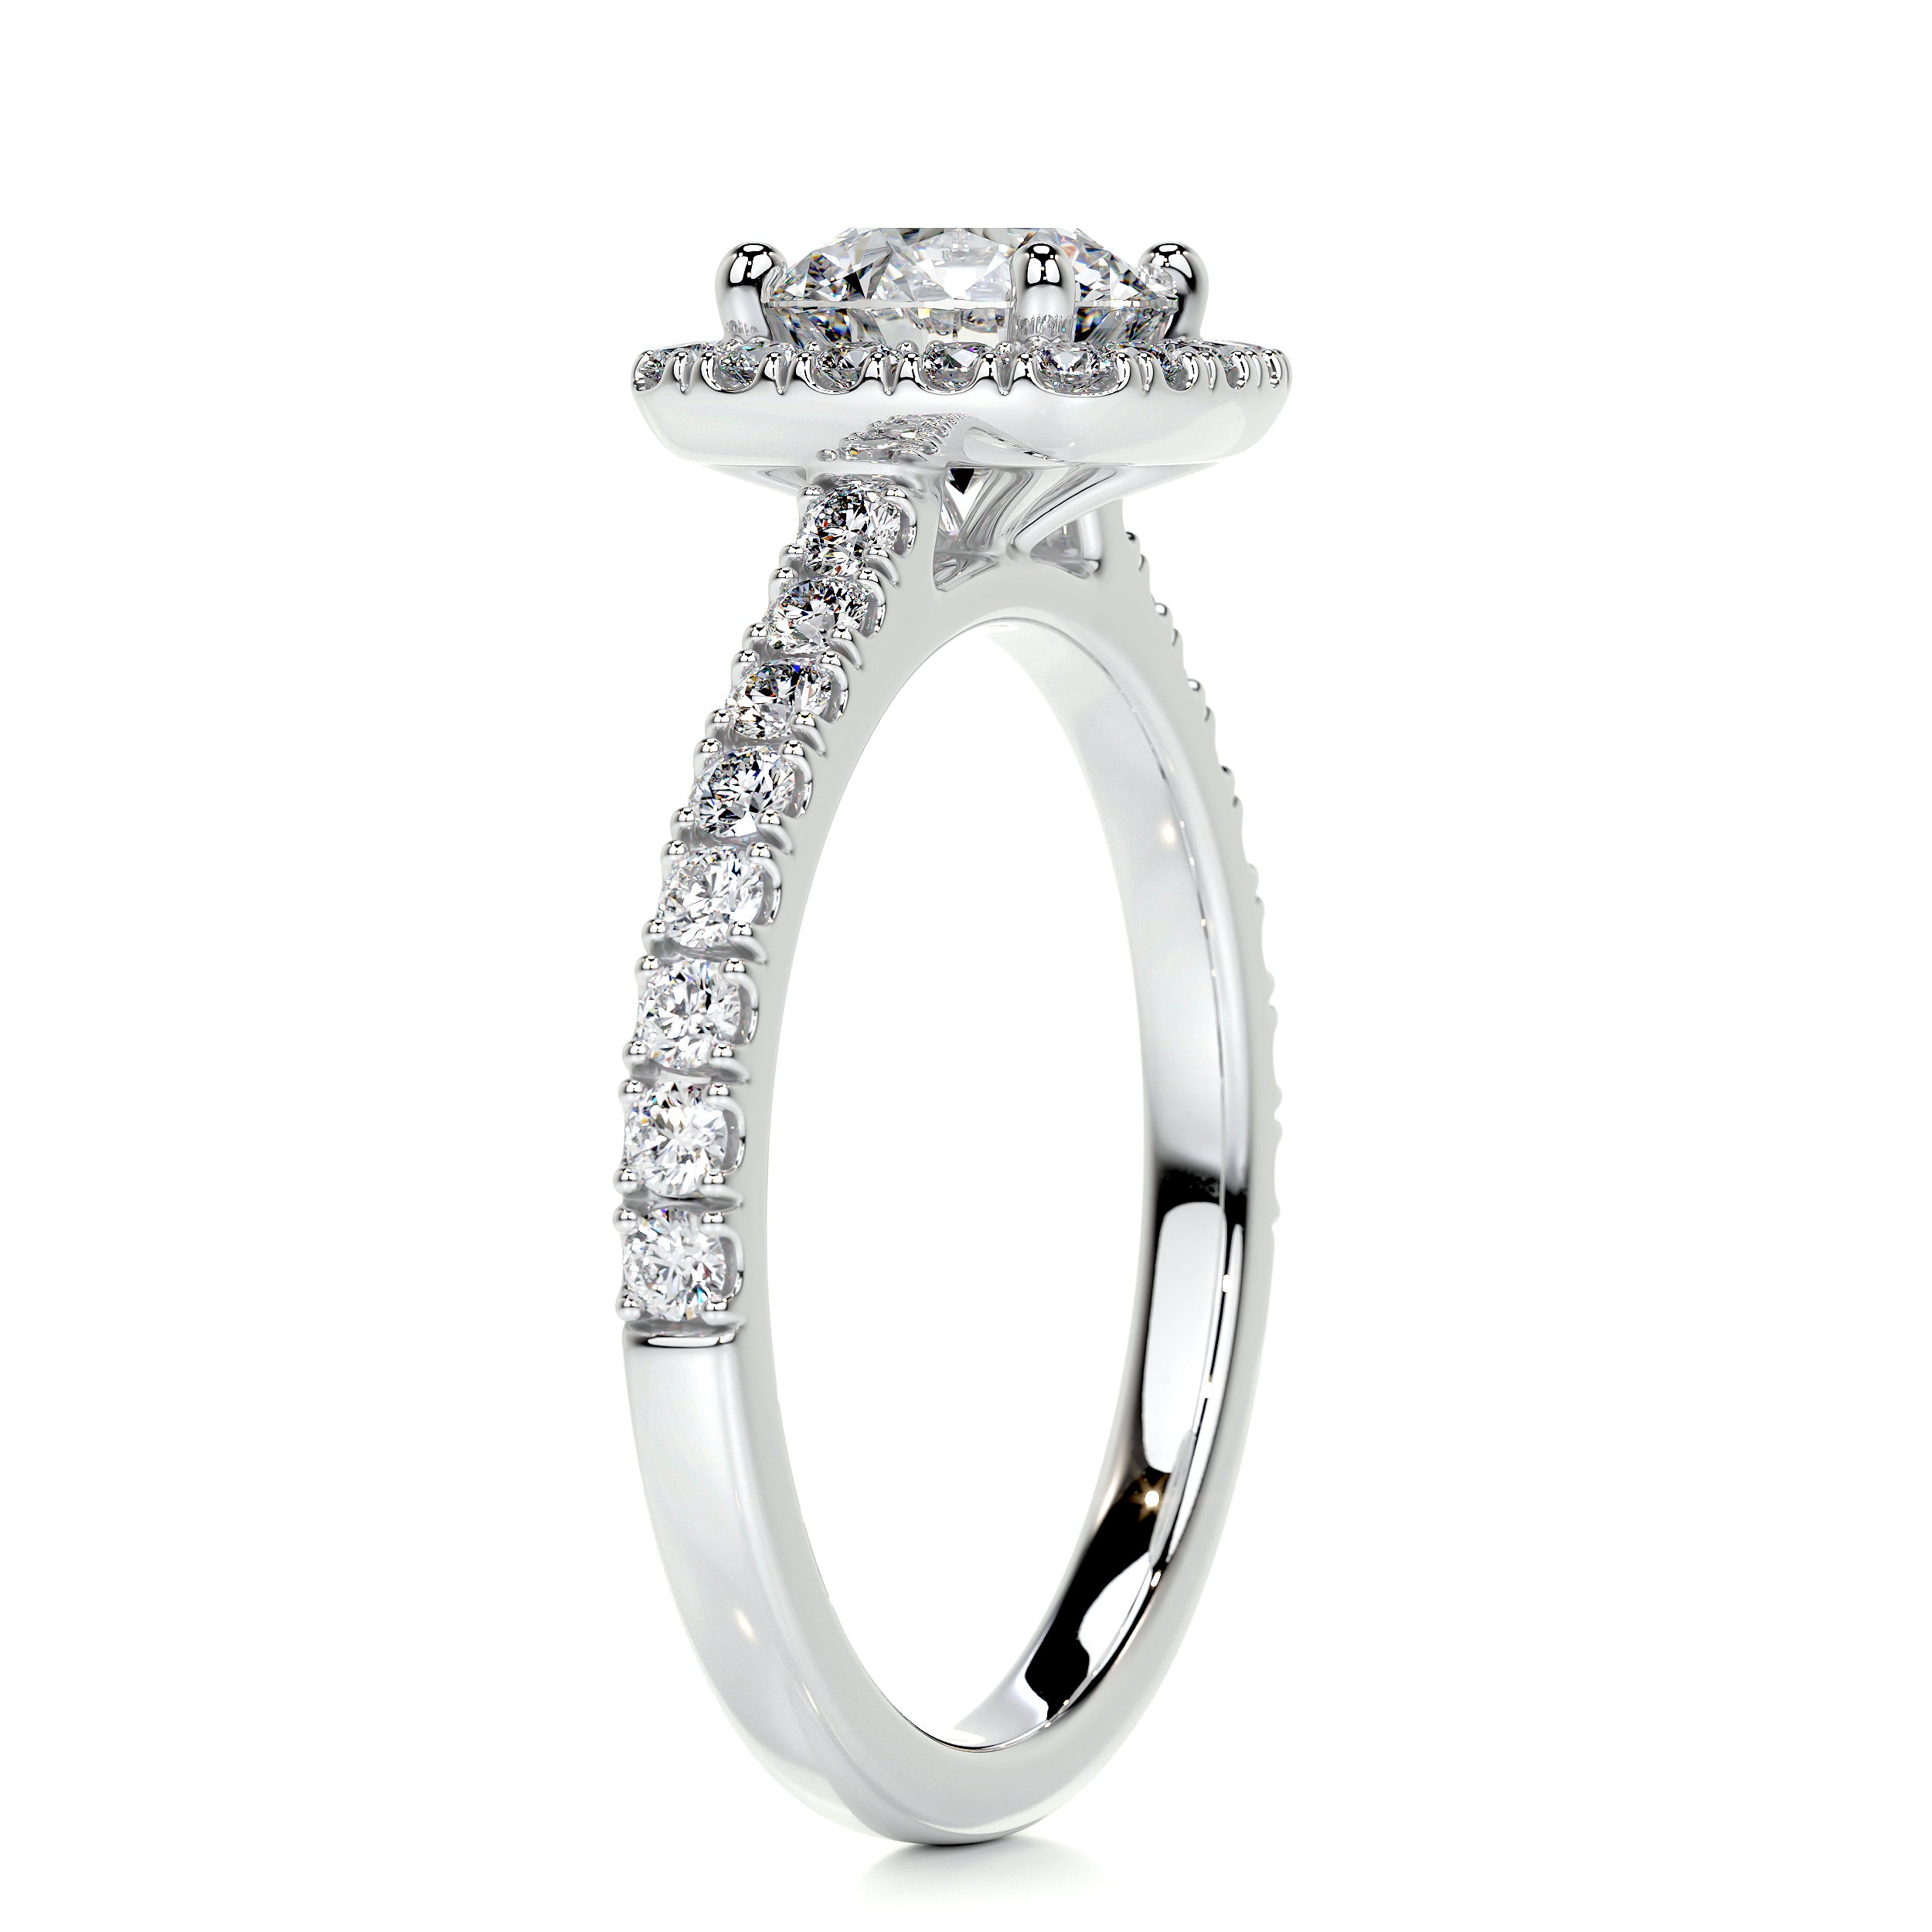 Claudia Diamond Engagement Ring   (1.4 Carat) -14K White Gold